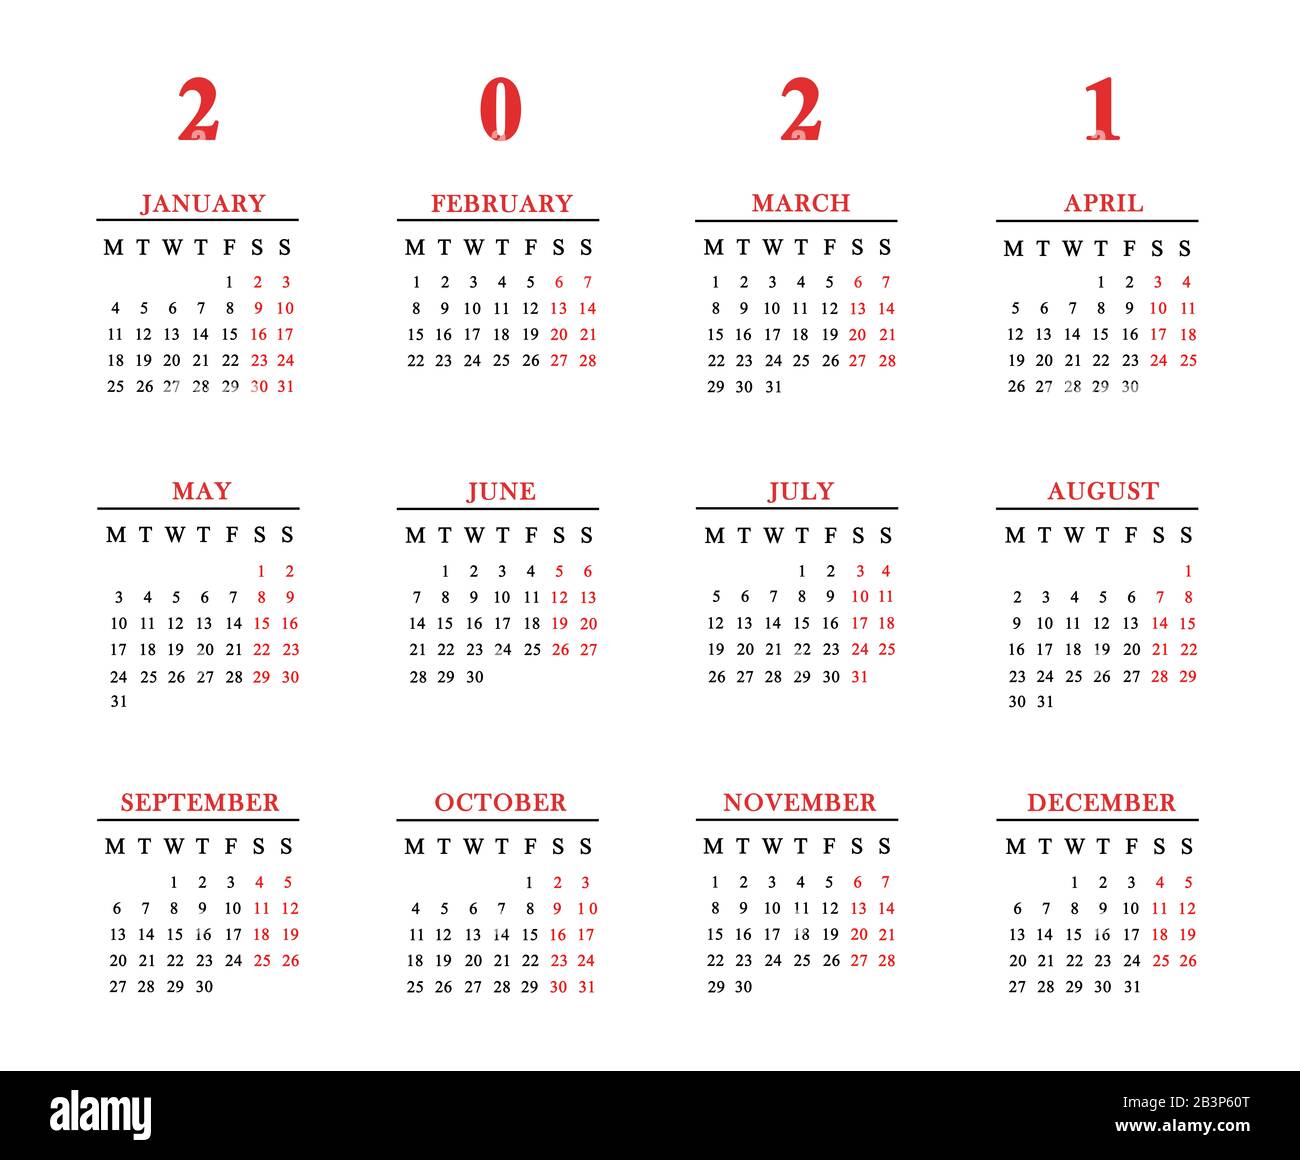 Calendar for 2021 on white background. Stock Photo